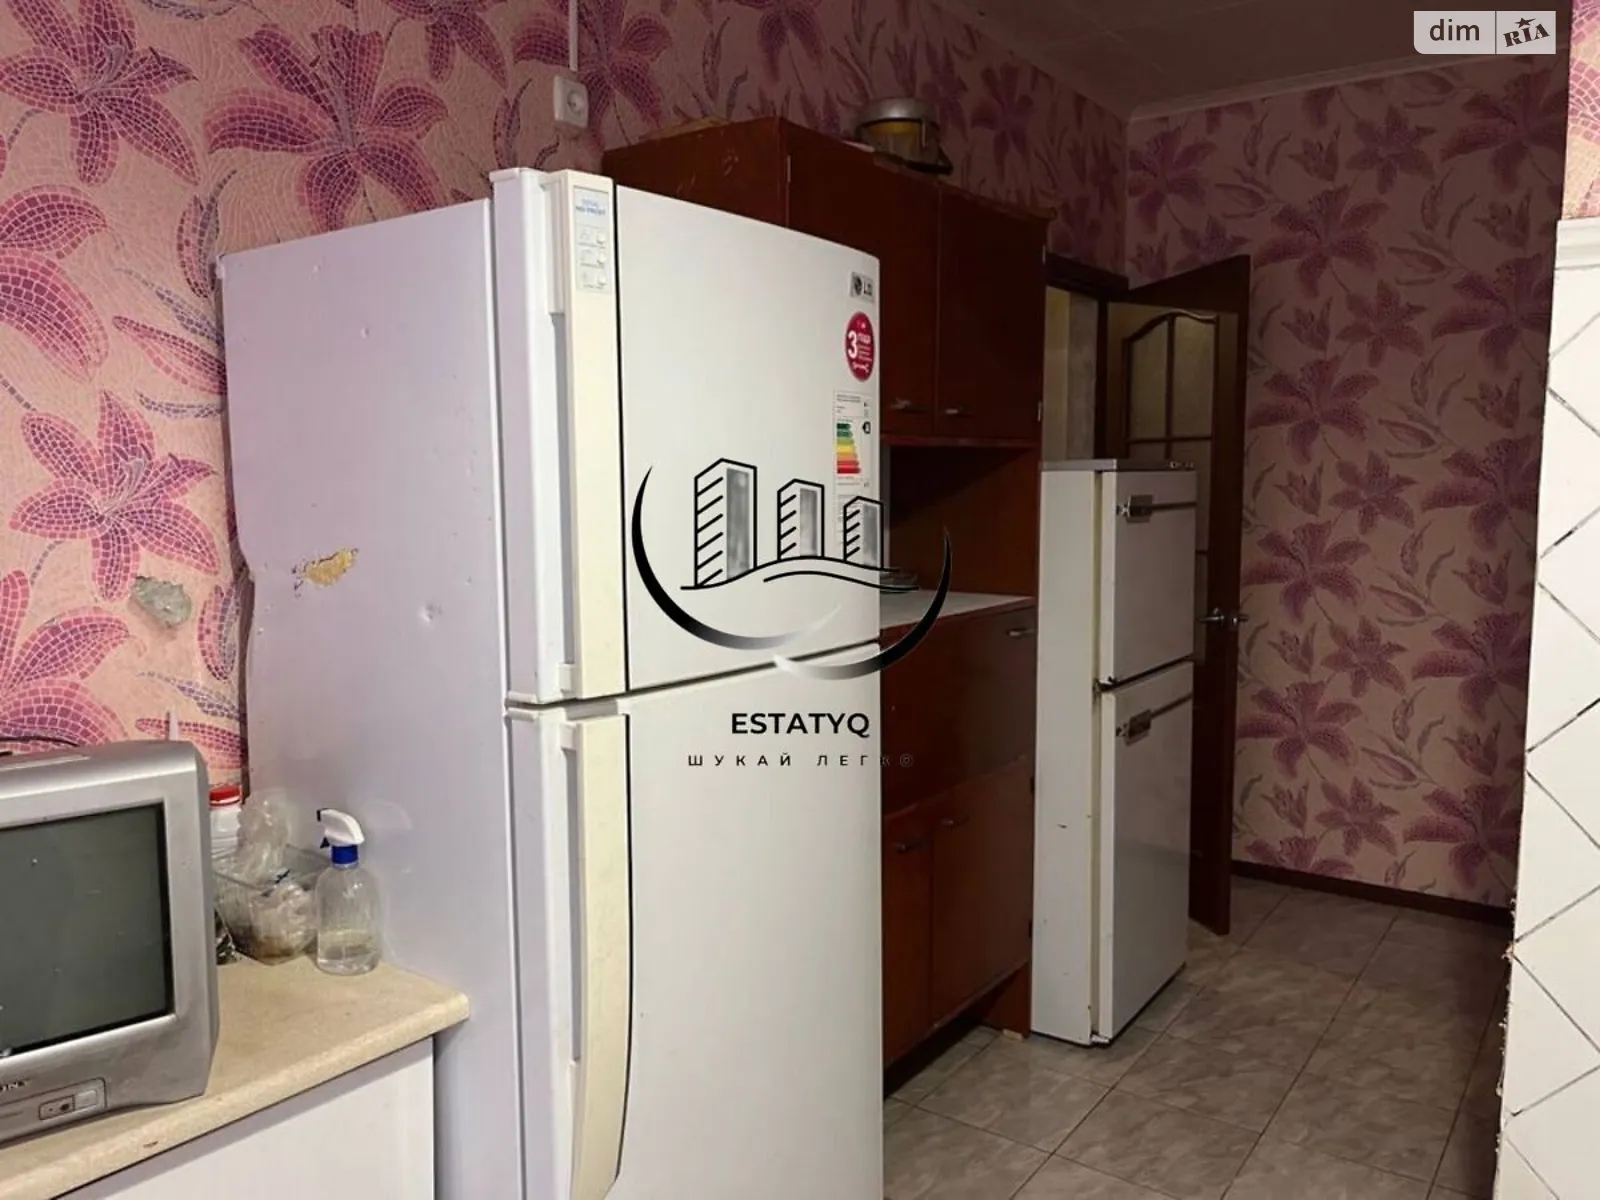 Сдается в аренду 2-комнатная квартира 60 кв. м в Харькове, ул. Академика Павлова, 140Д - фото 1